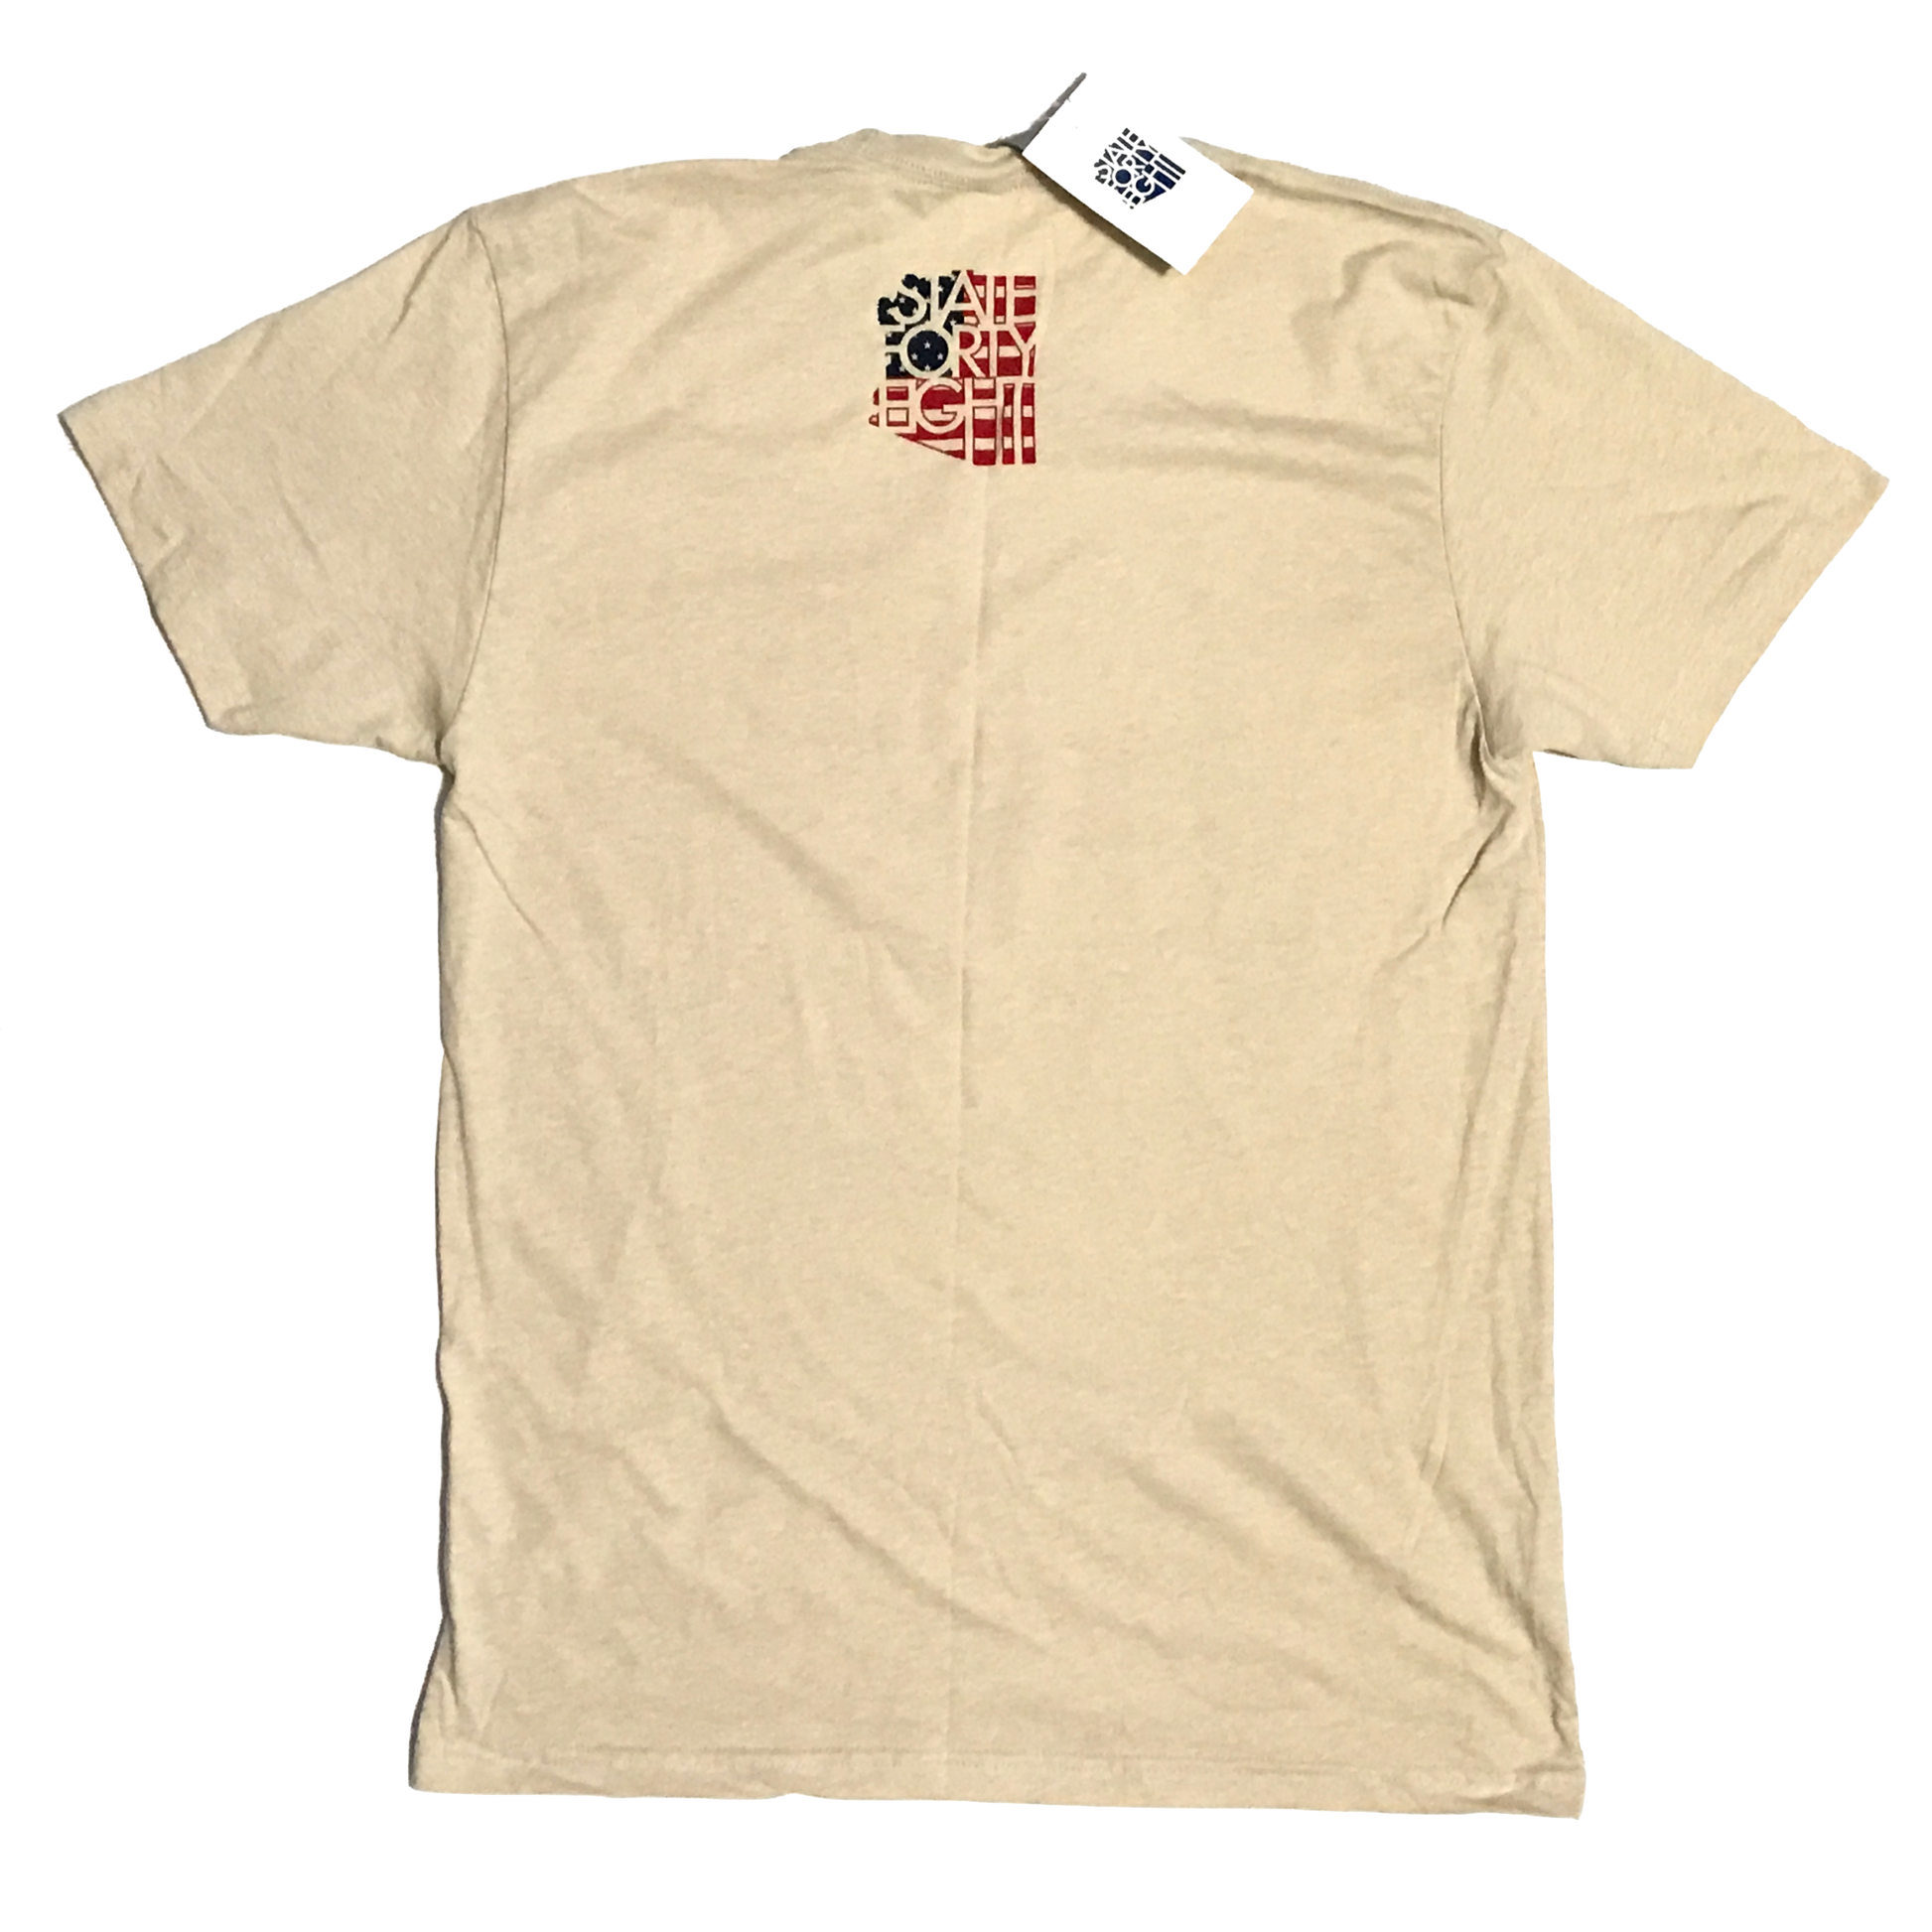 NEW Arizona Diamondbacks State Forty Eight USA Shirt - M – Hess & Ellis